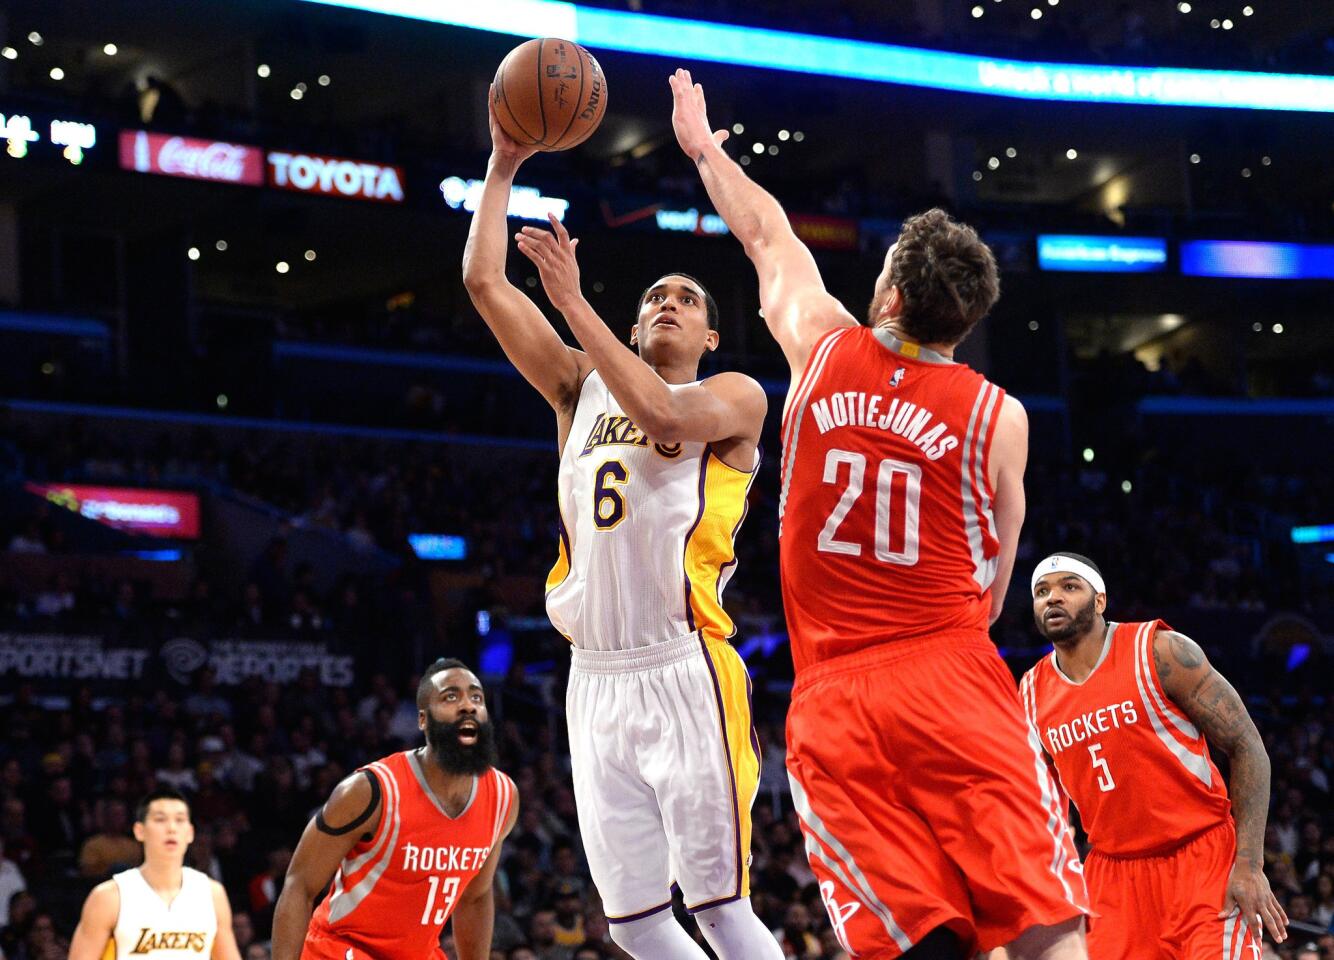 Lakers guard Jordan Clarkson scores over Rockets forward Donatas Motiejunas in the second half.